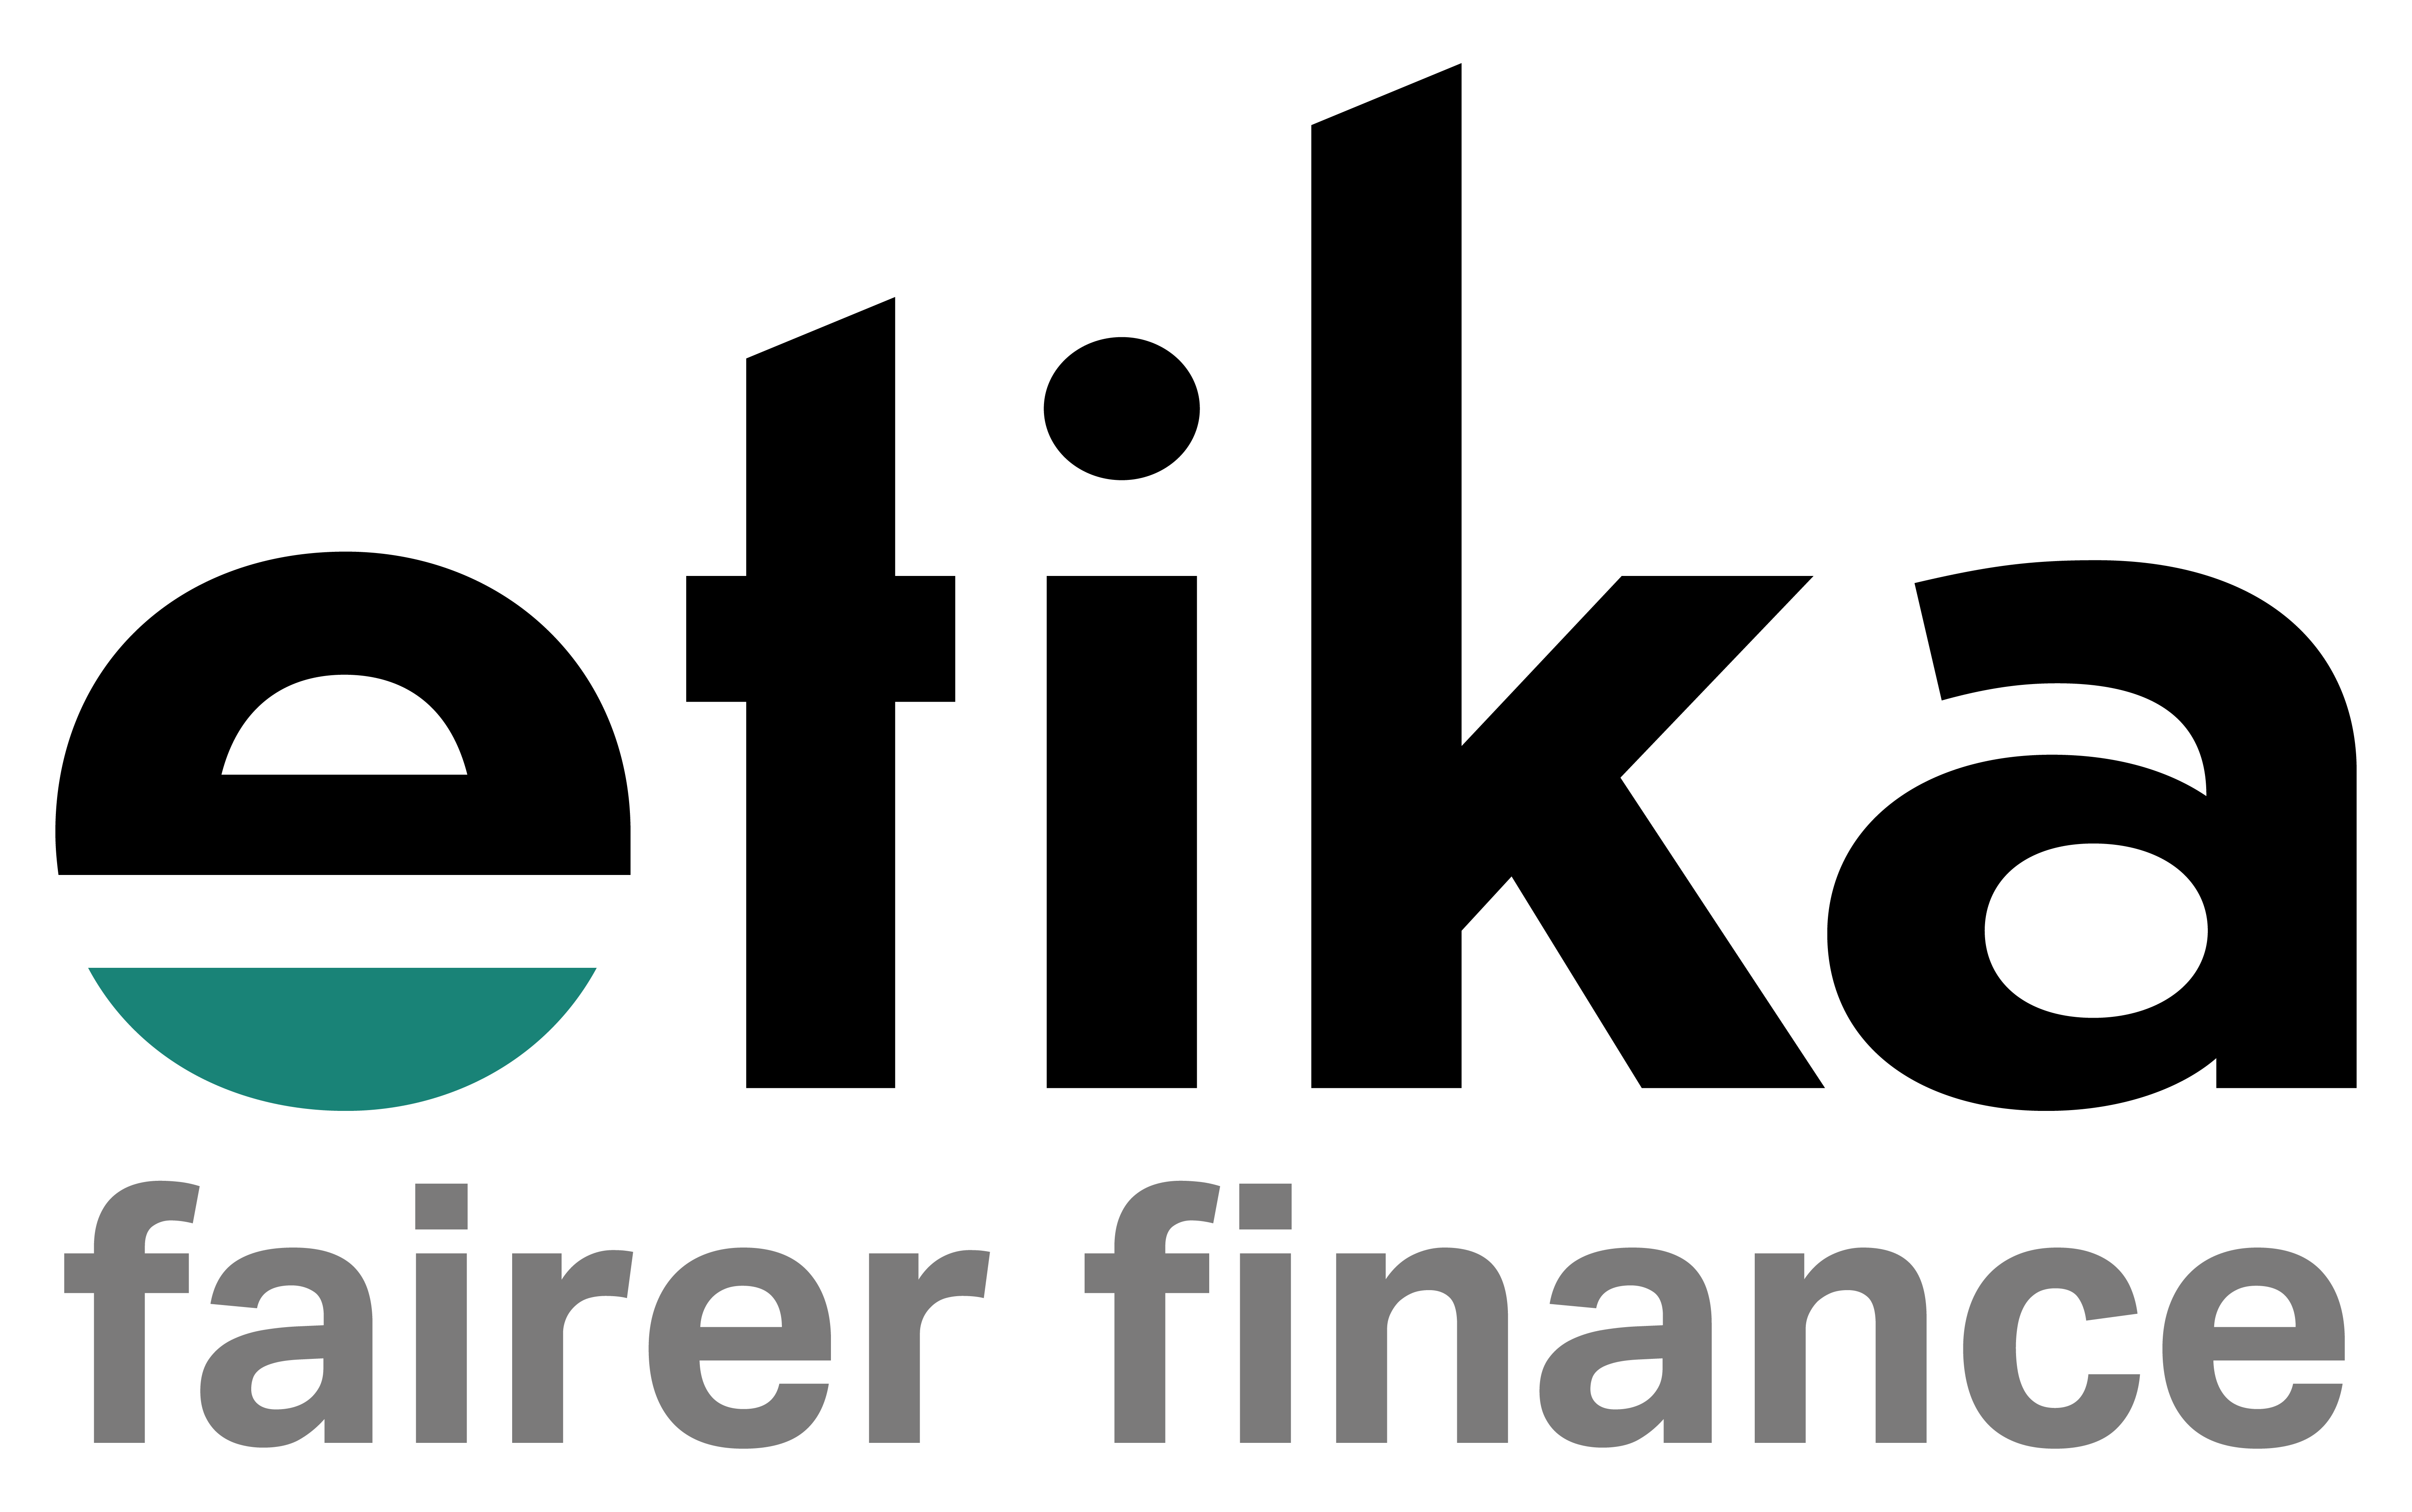 etika logo - the slogan is fairer finance